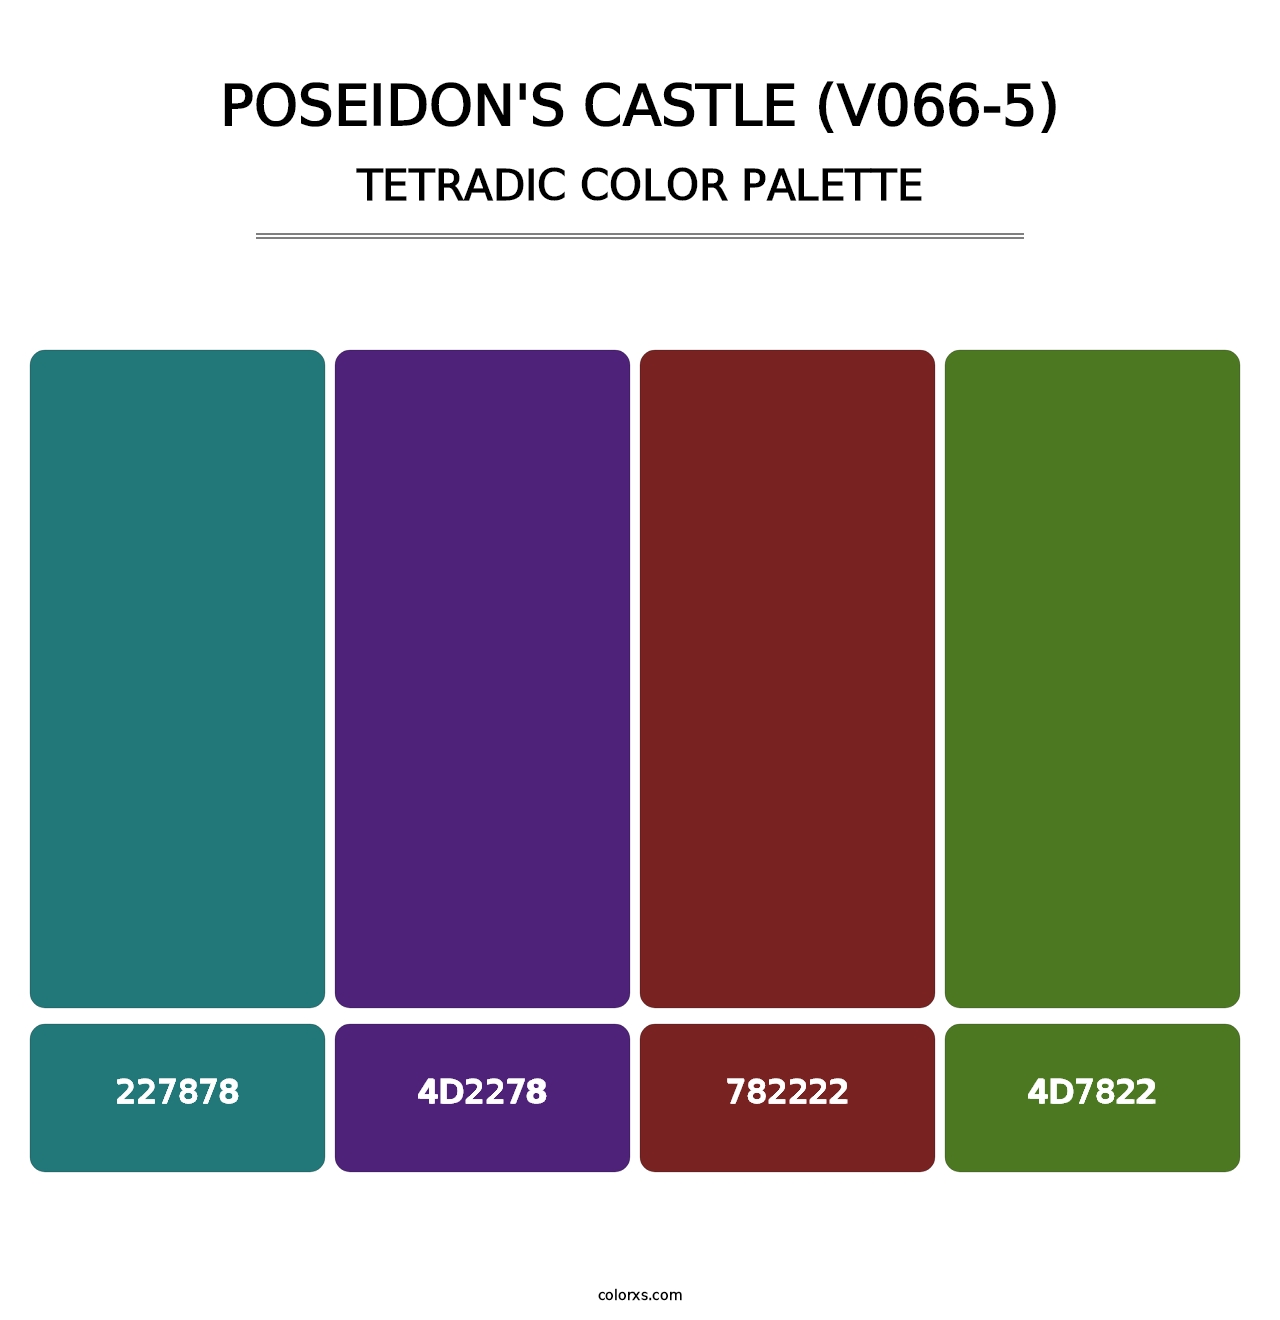 Poseidon's Castle (V066-5) - Tetradic Color Palette